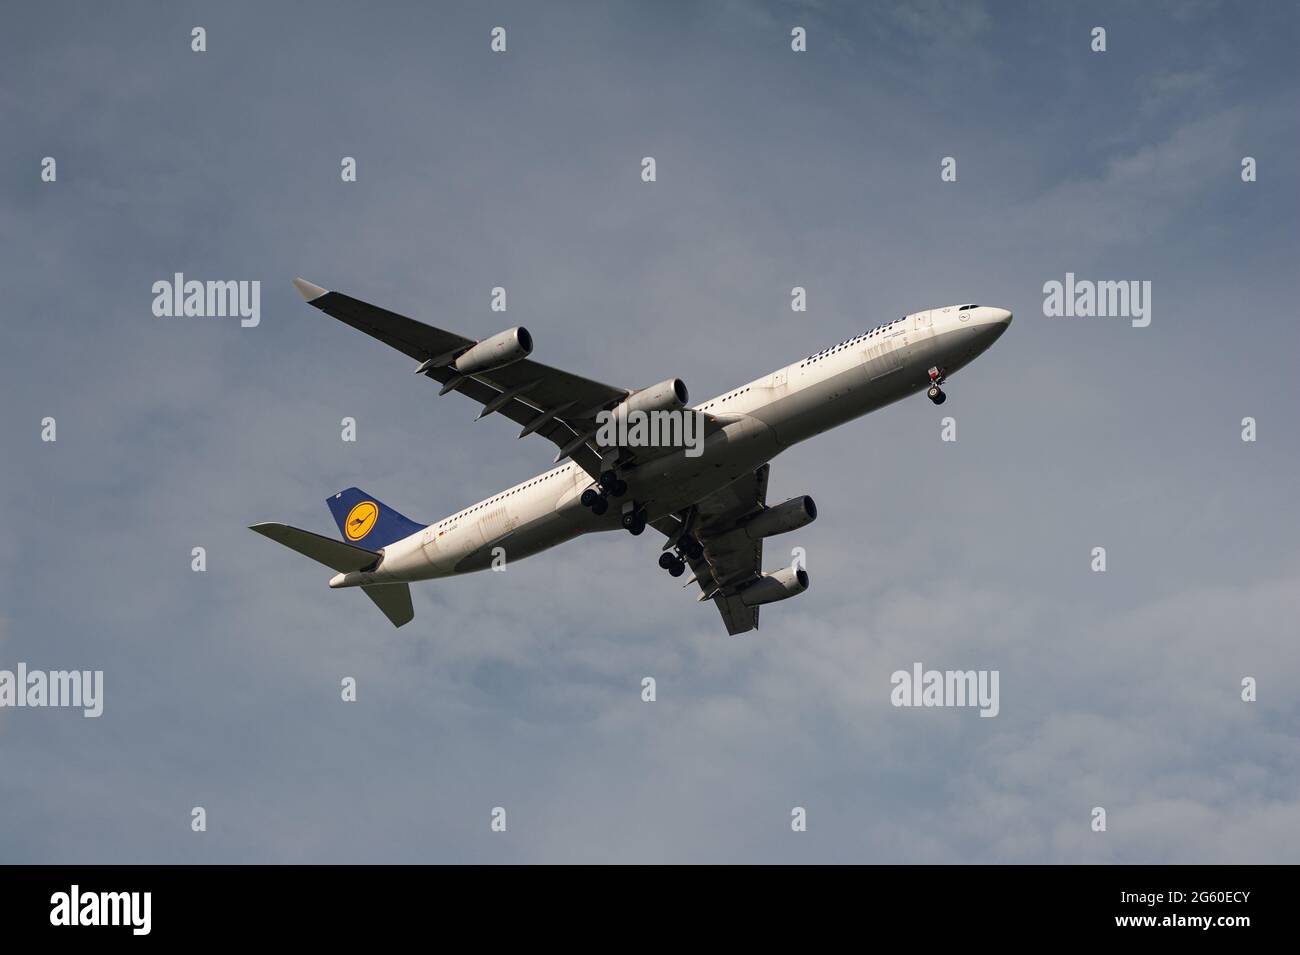 30.06.2021, Singapore, Republic of Singapore, Asia - A Lufthansa Airbus A340-300 passenger jet approaches Changi International Airport for landing. Stock Photo